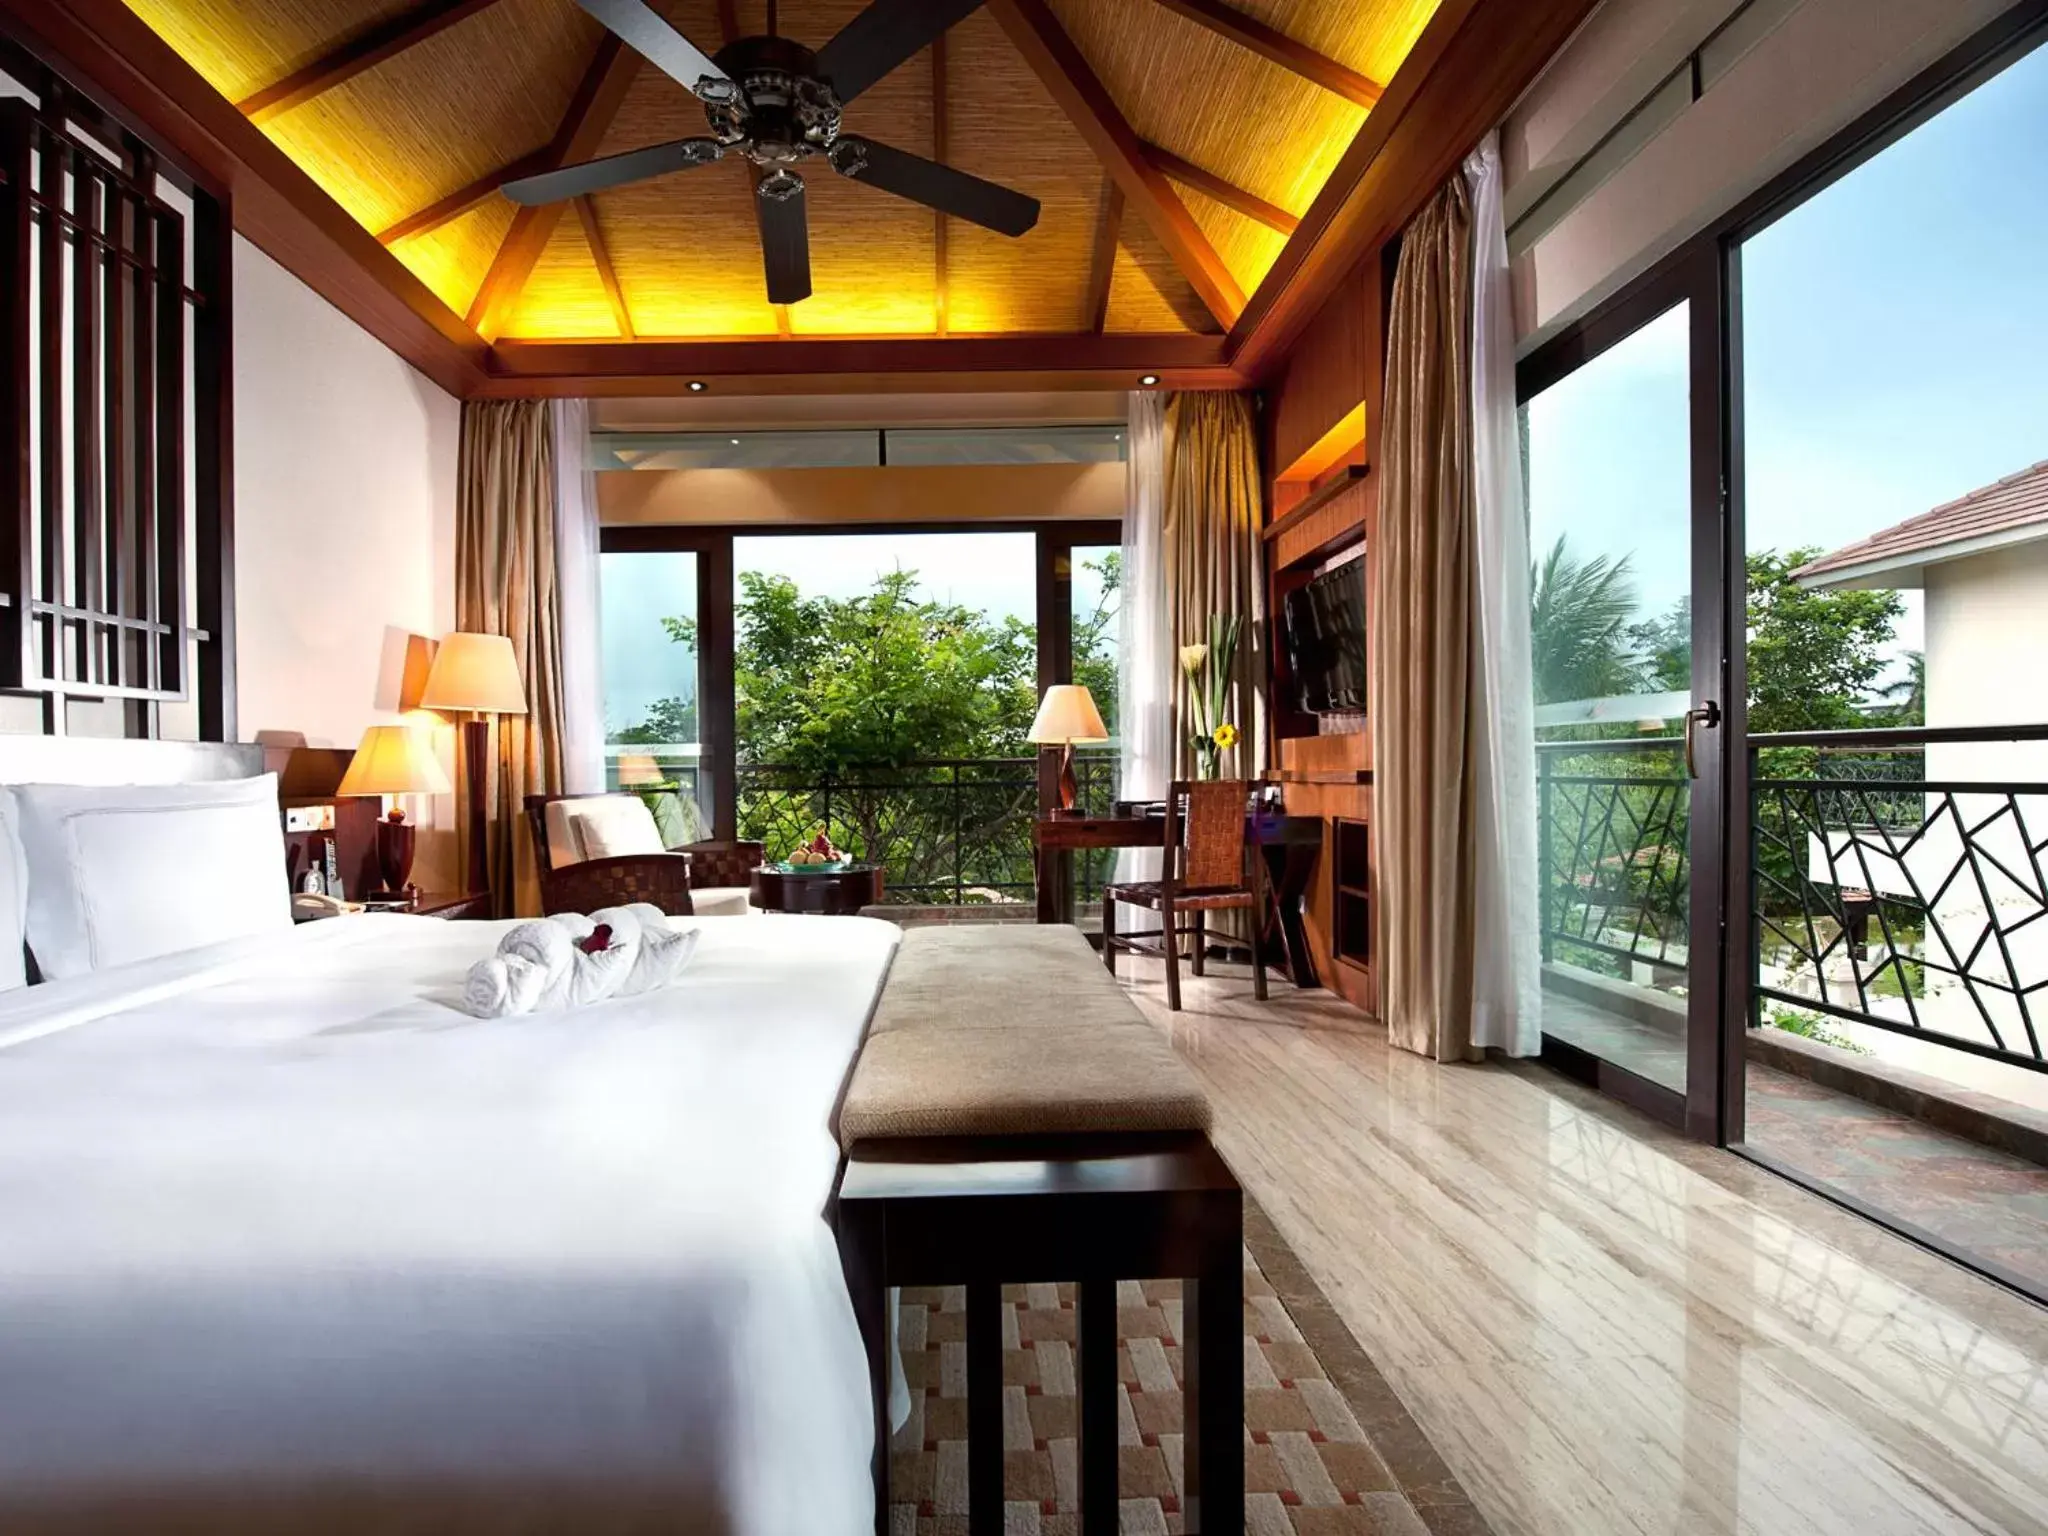 Bedroom in Grand Metropark Villa Resort Sanya Yalong Bay